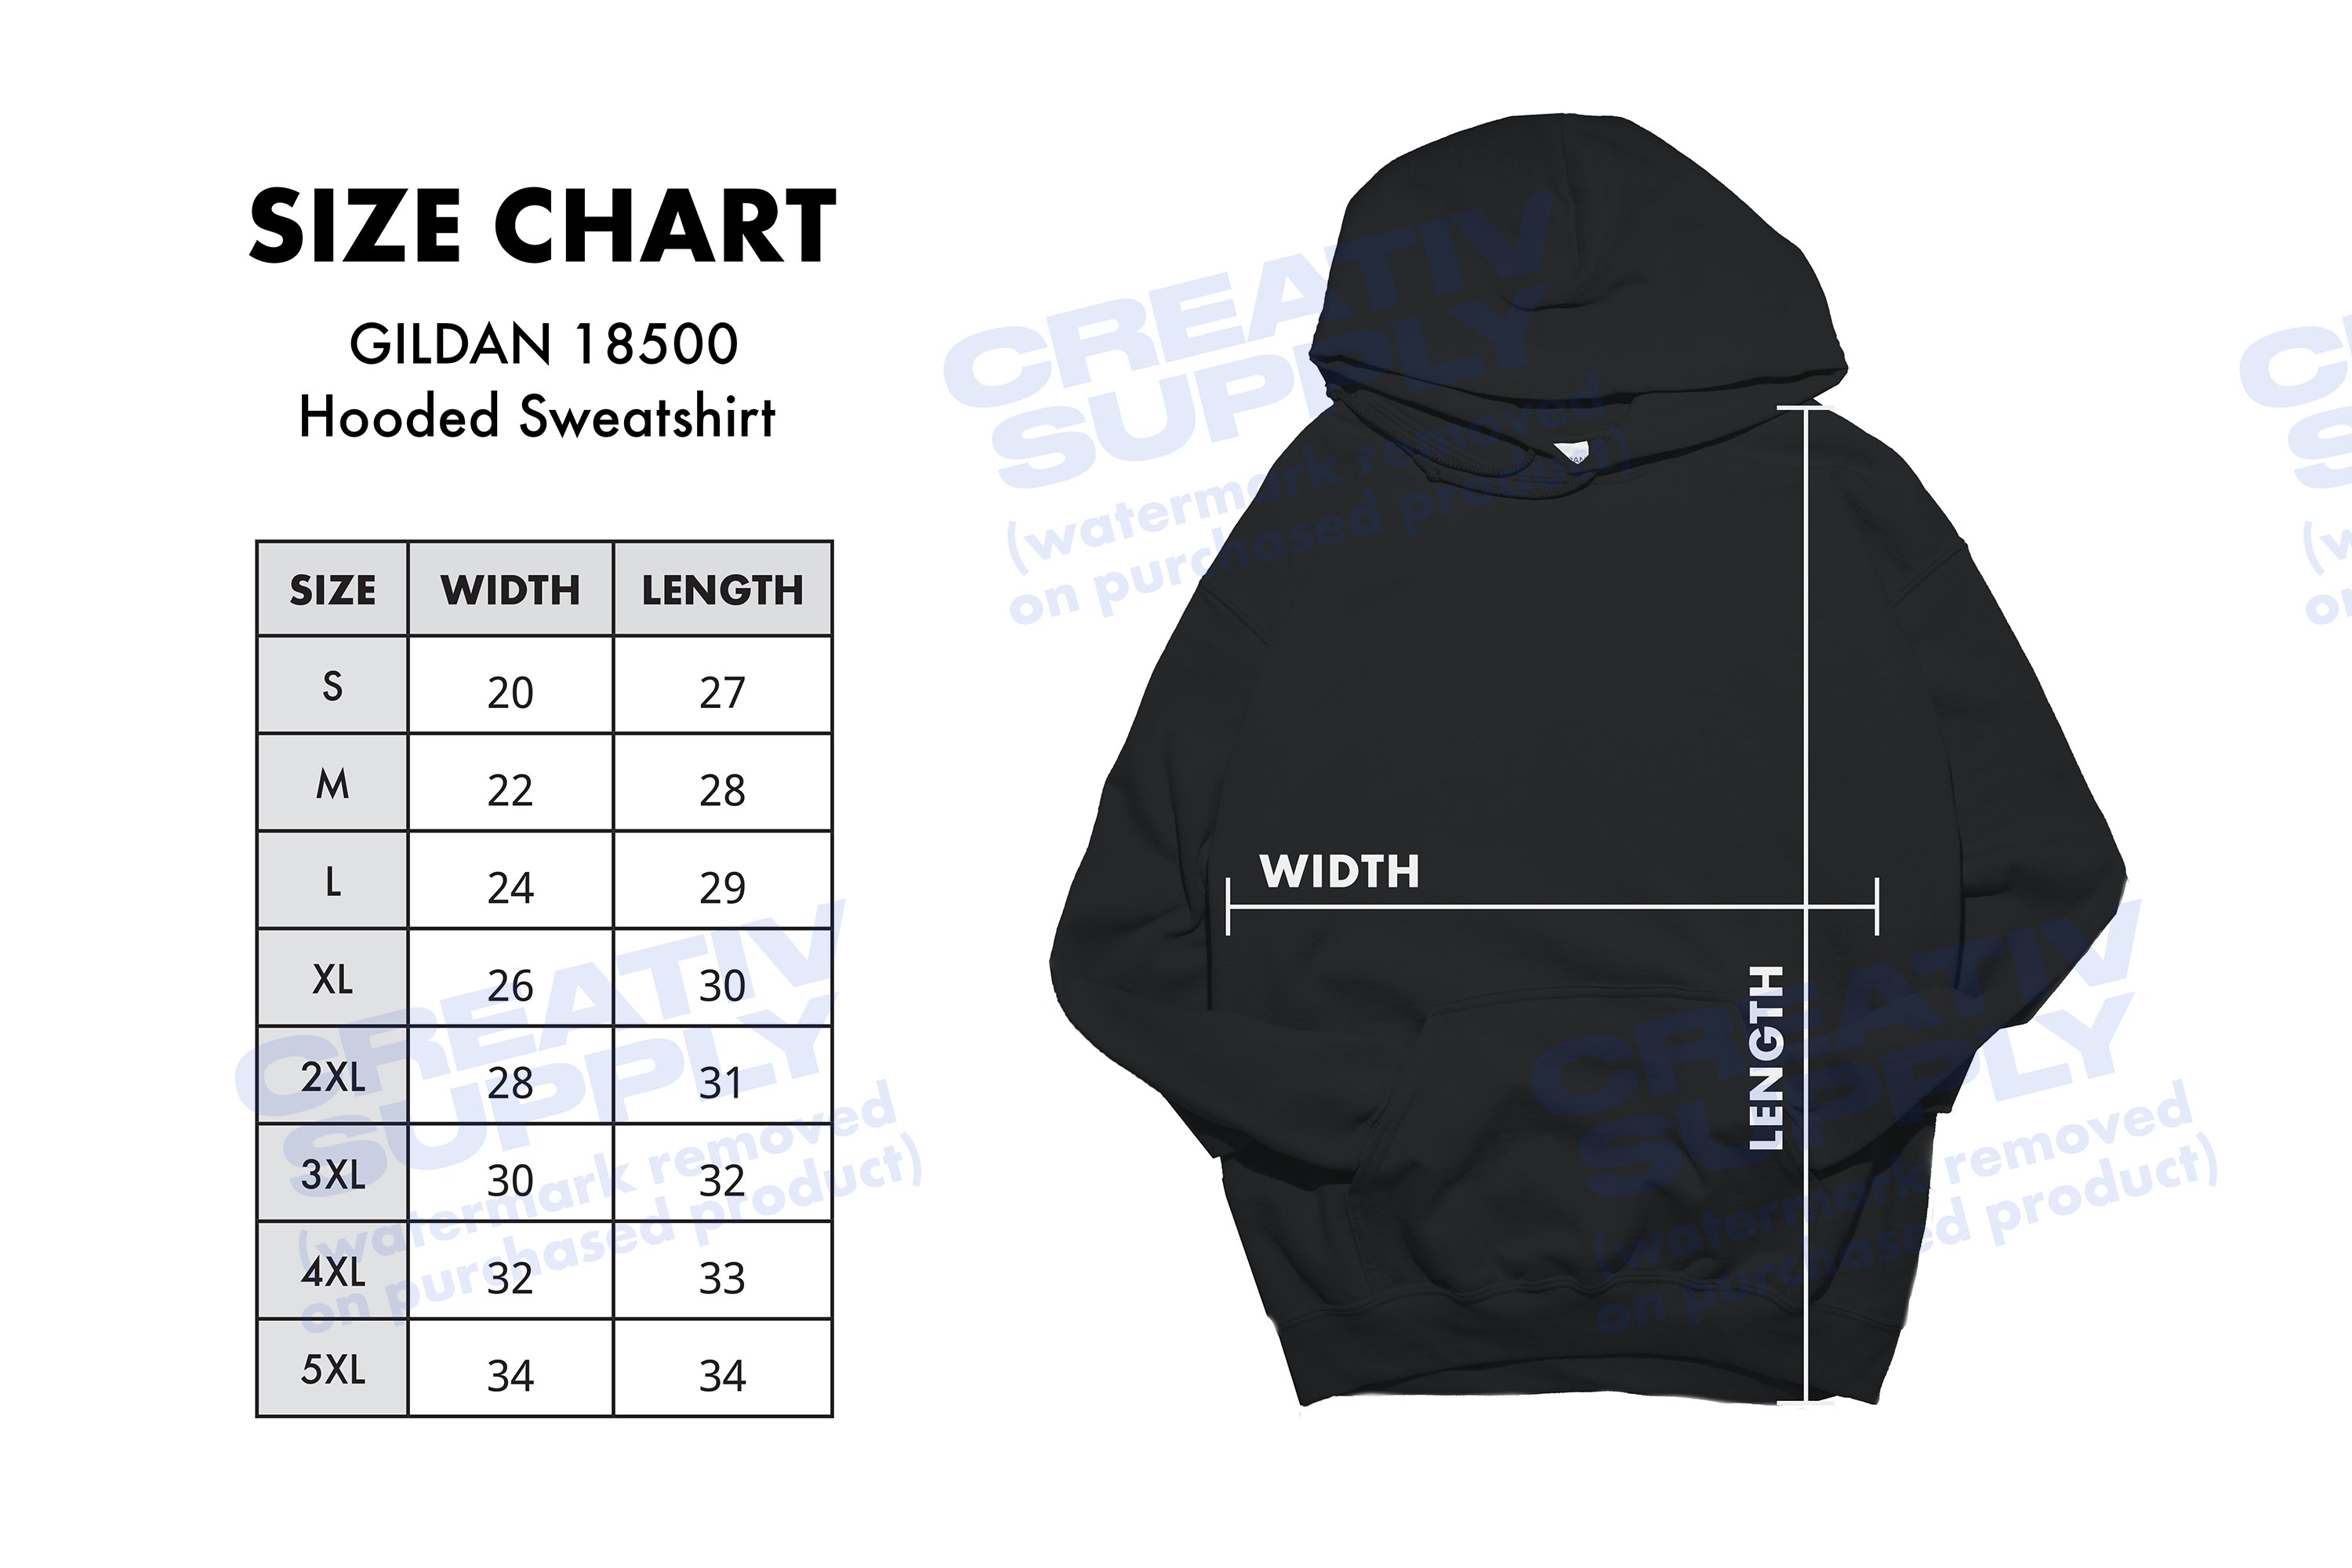 Gildan 18500 Hoodie Size Chart cover image.